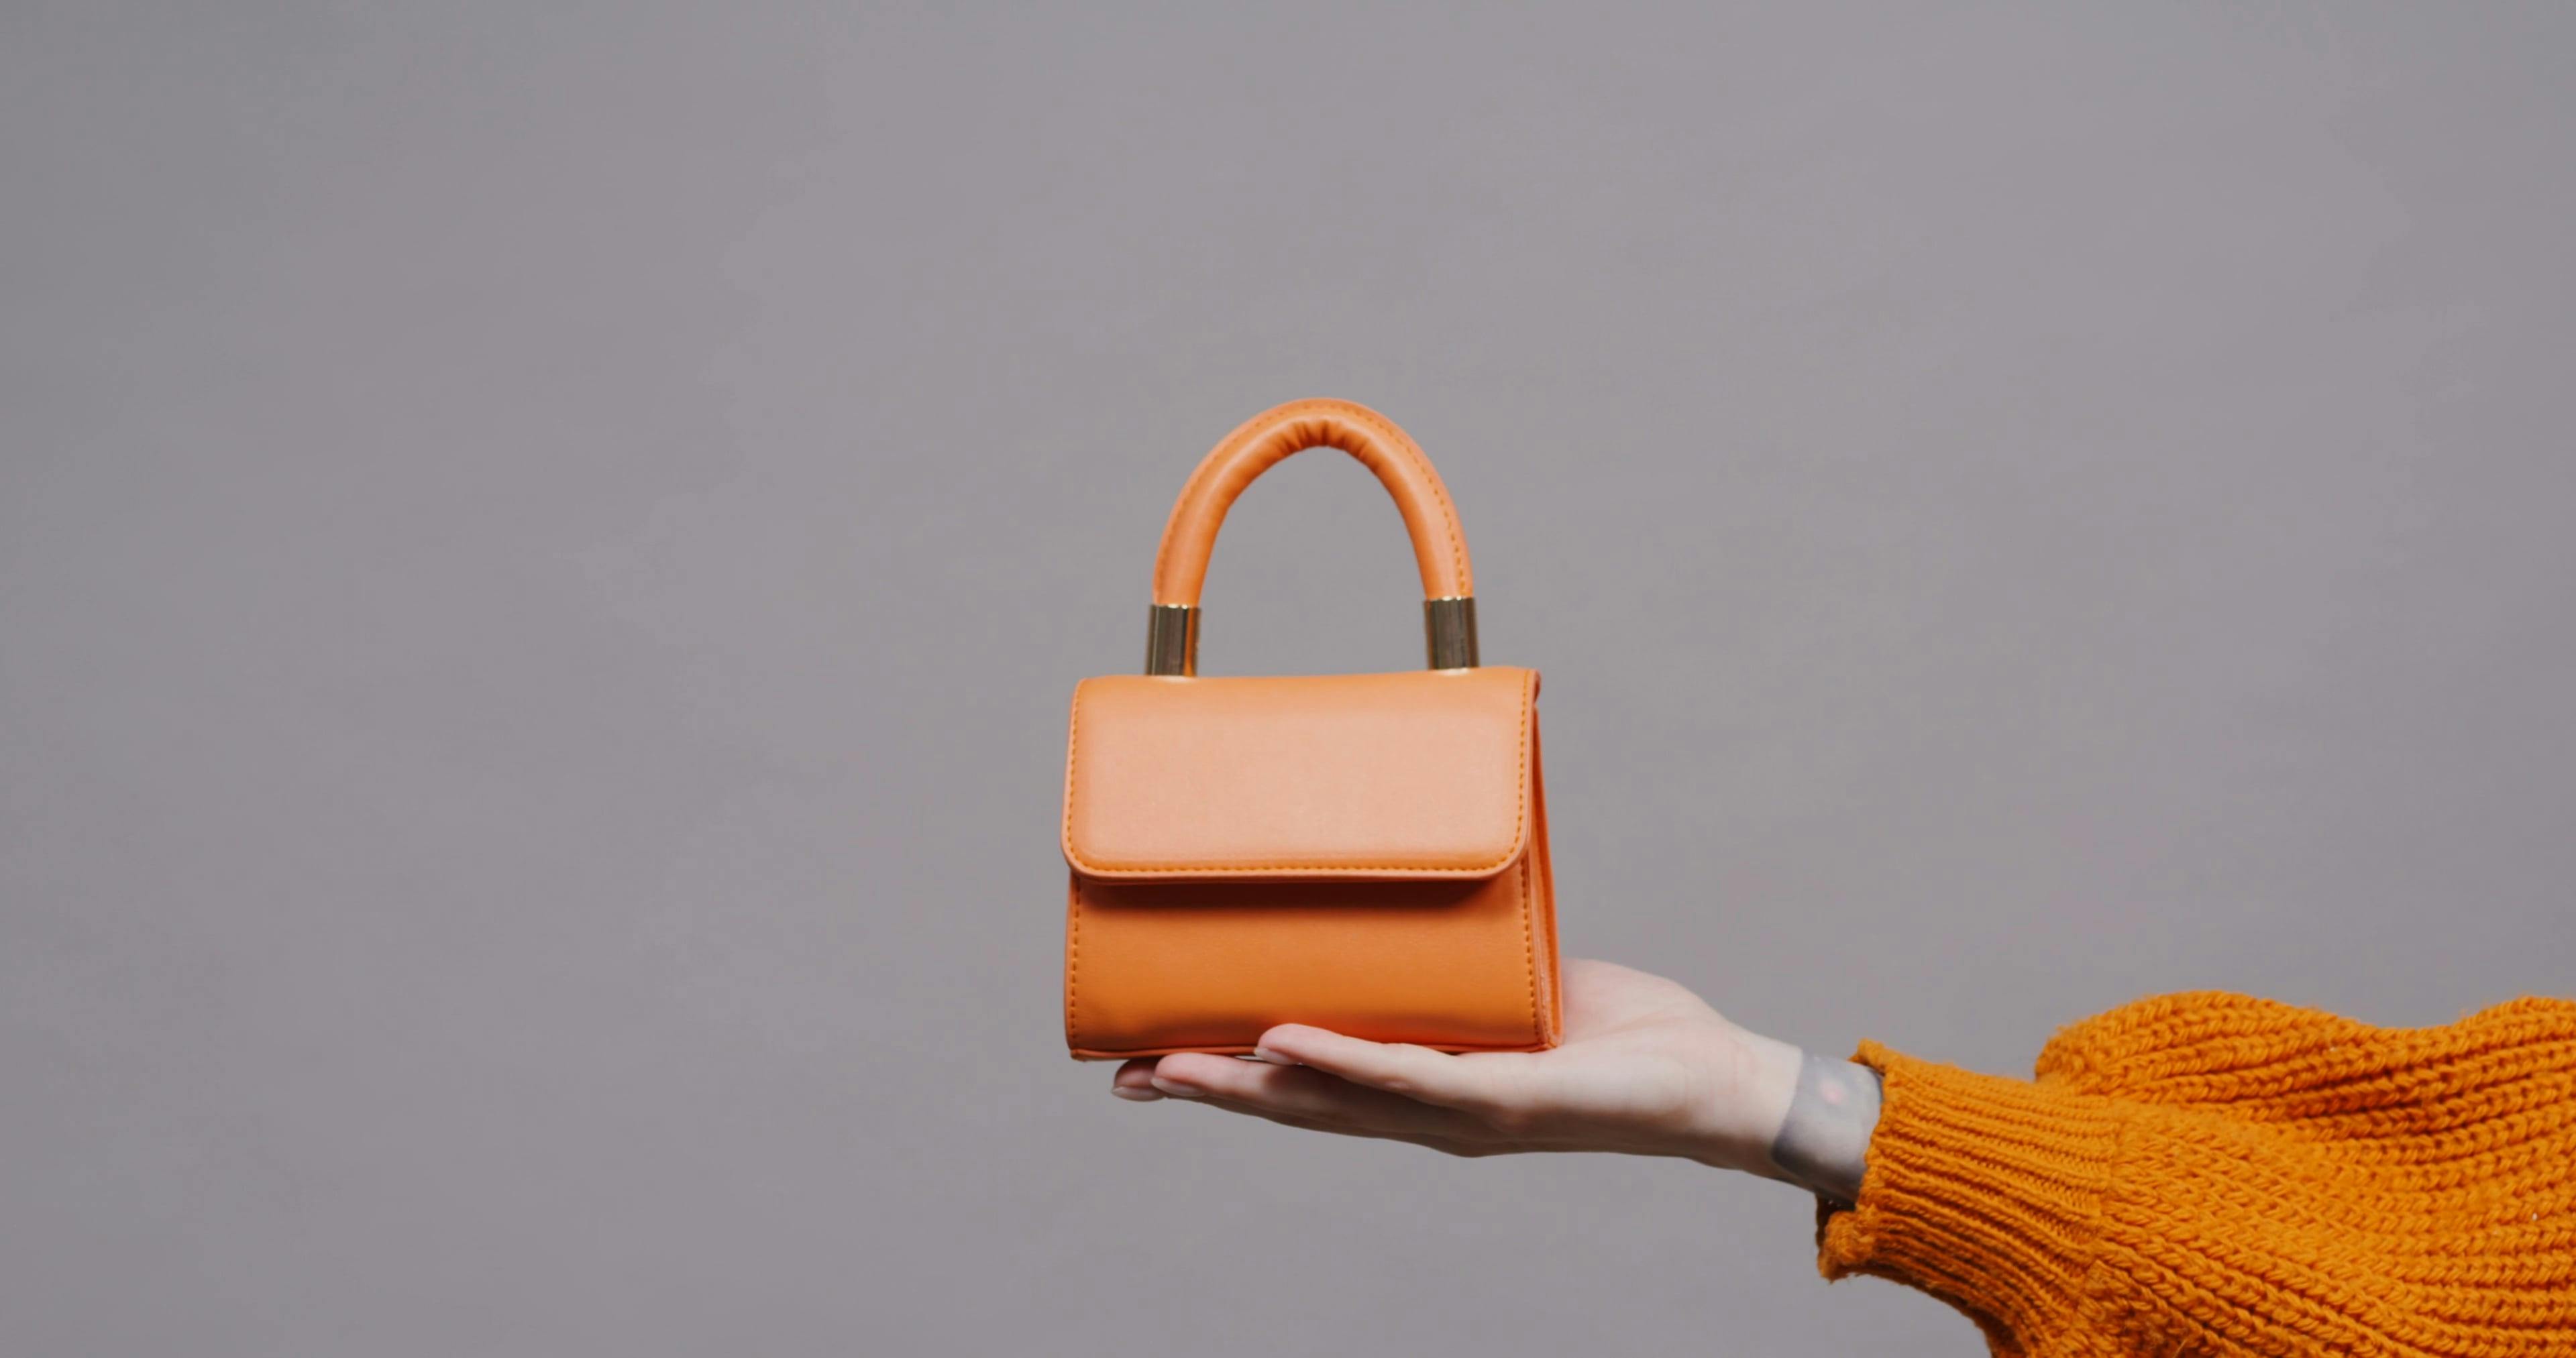 A Person Holding an Orange Handbag · Free Stock Video